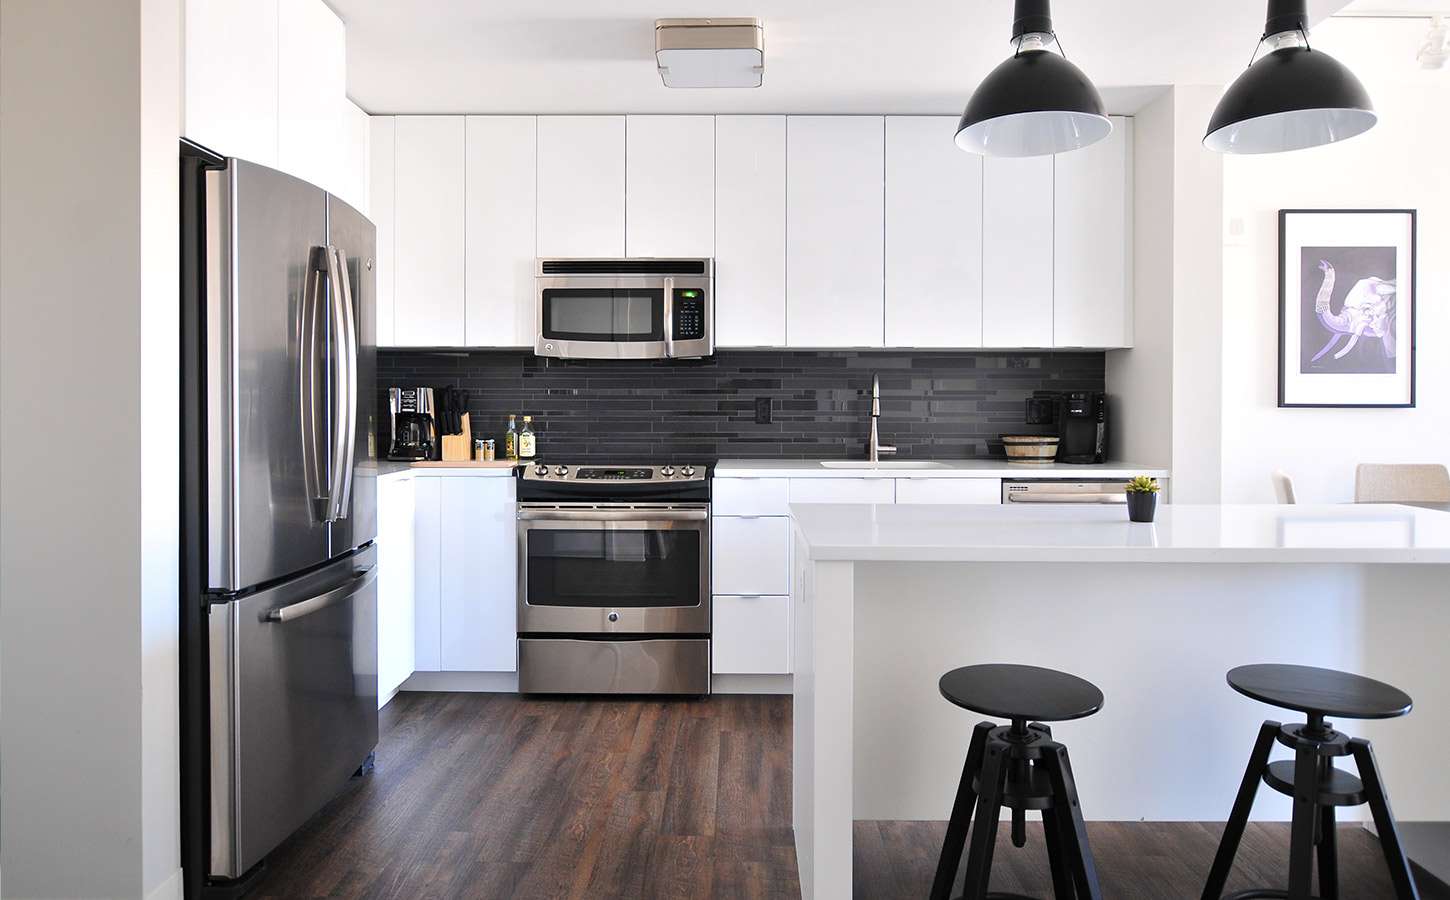 White modern kitchen with stainless steel appliances.